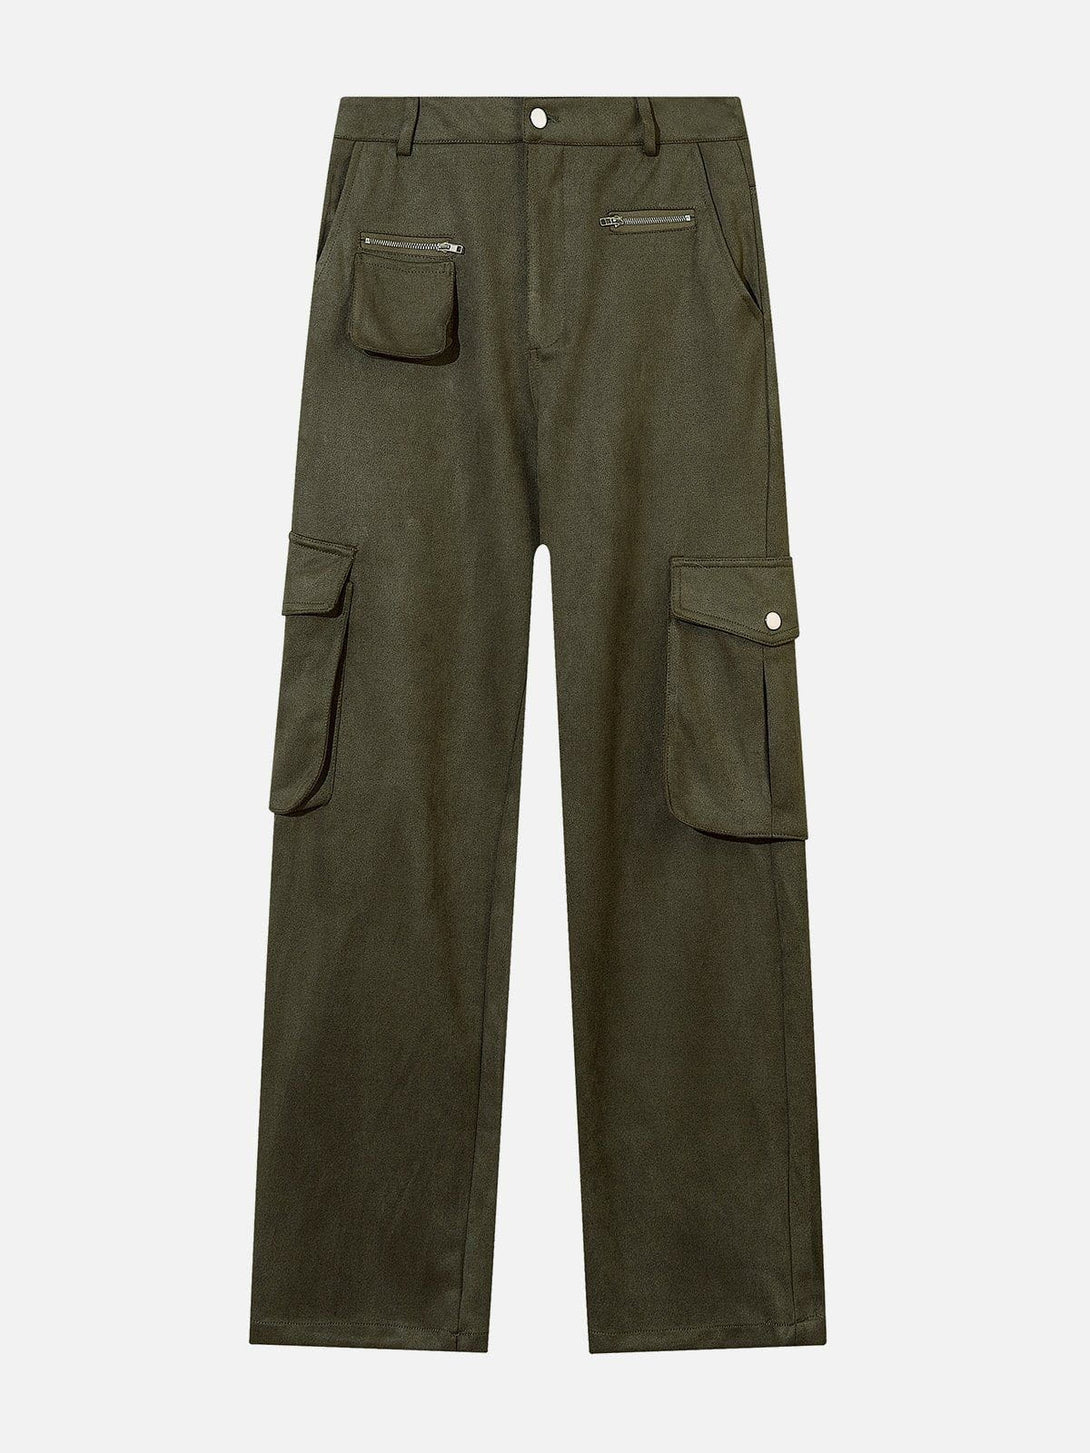 Levefly - Multi-Pocket Suede Pants - Streetwear Fashion - levefly.com